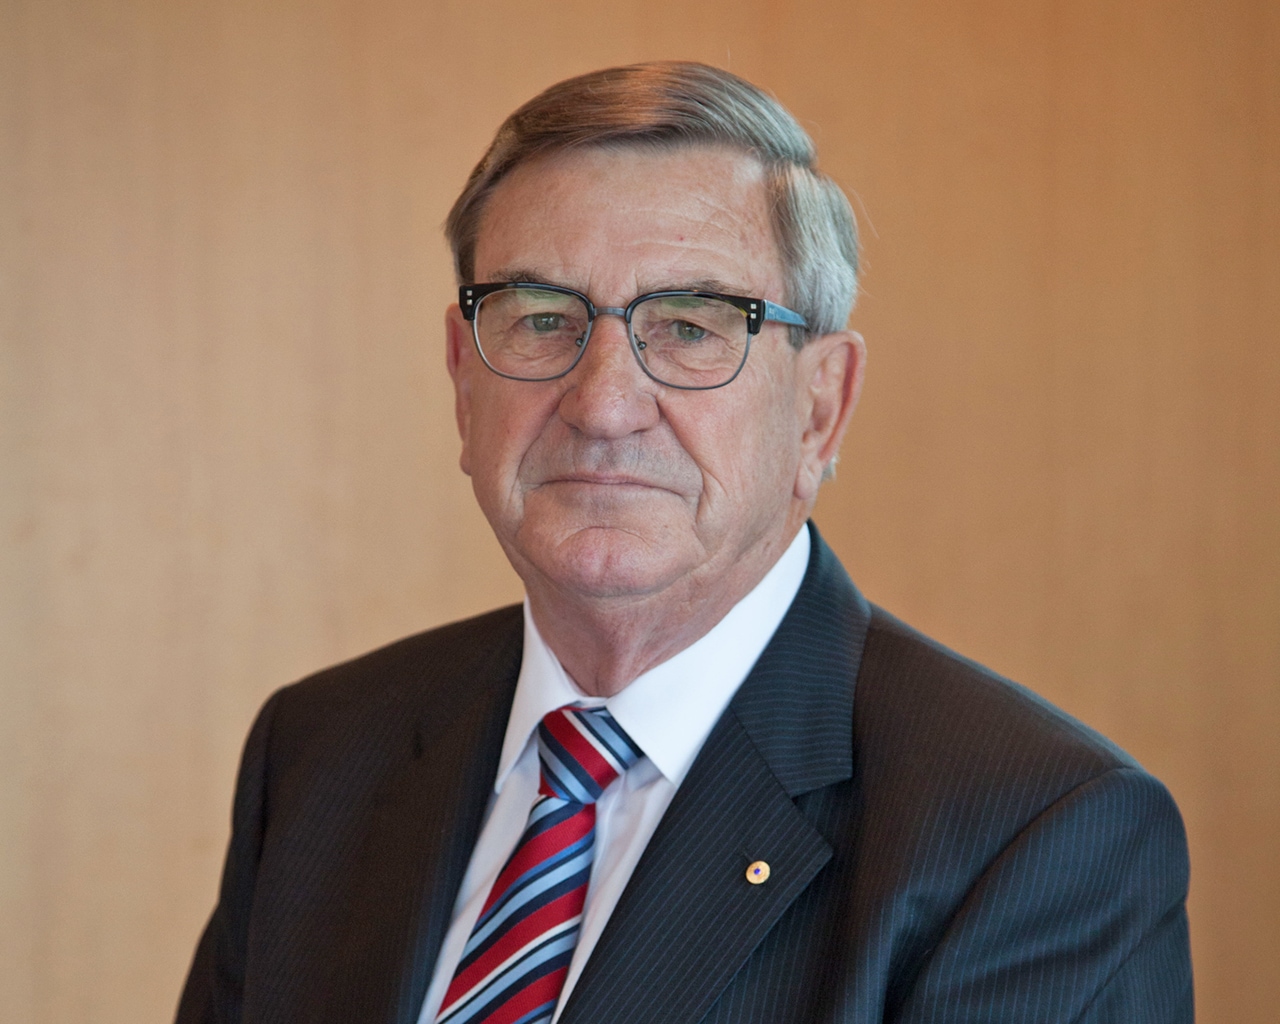 Huawei Australia Chairman John Lord AM